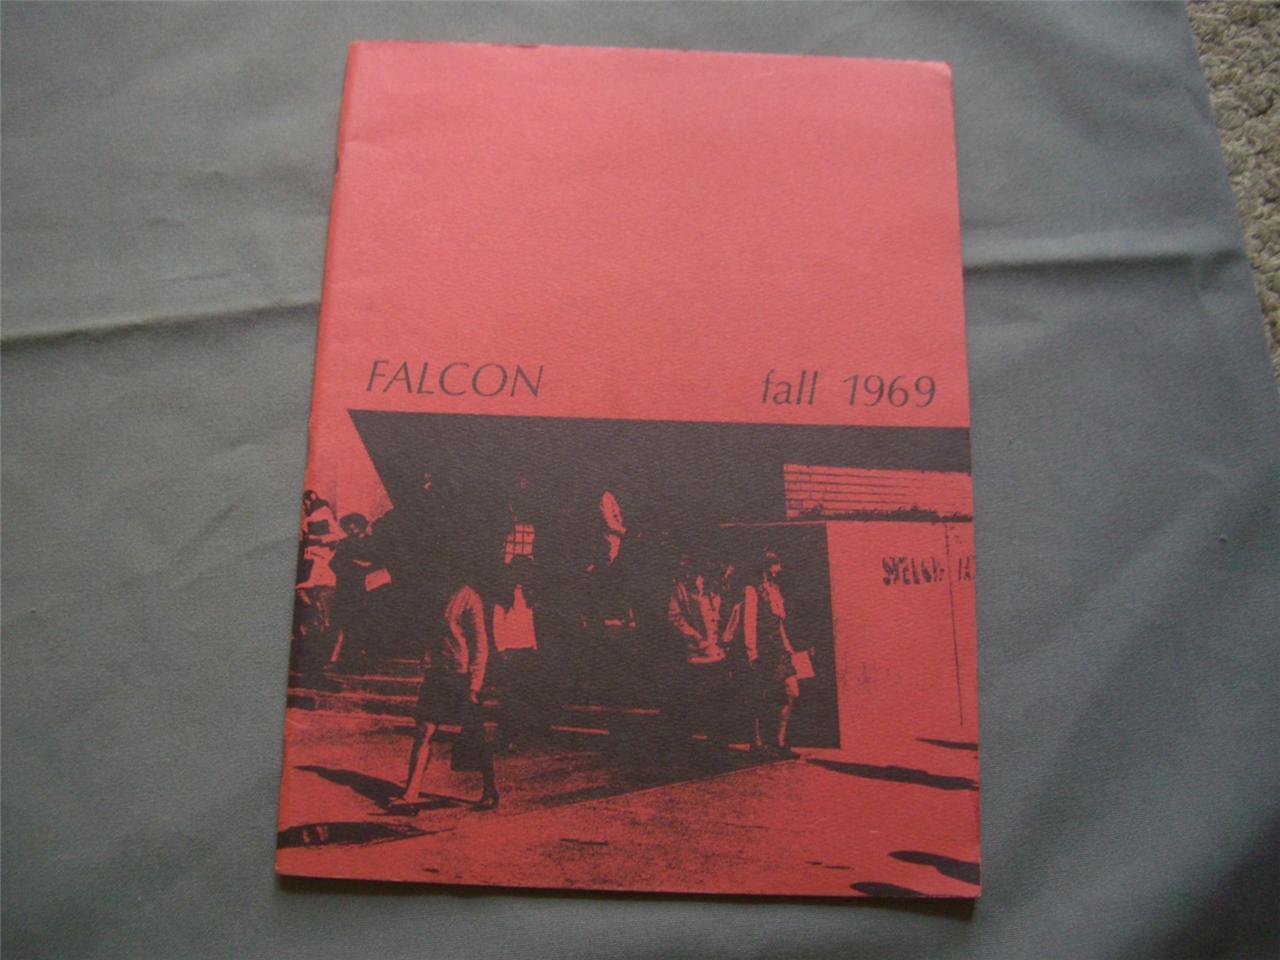 Yearbook Annual Coalinga West Hills College Falcon California Fall 1969 69